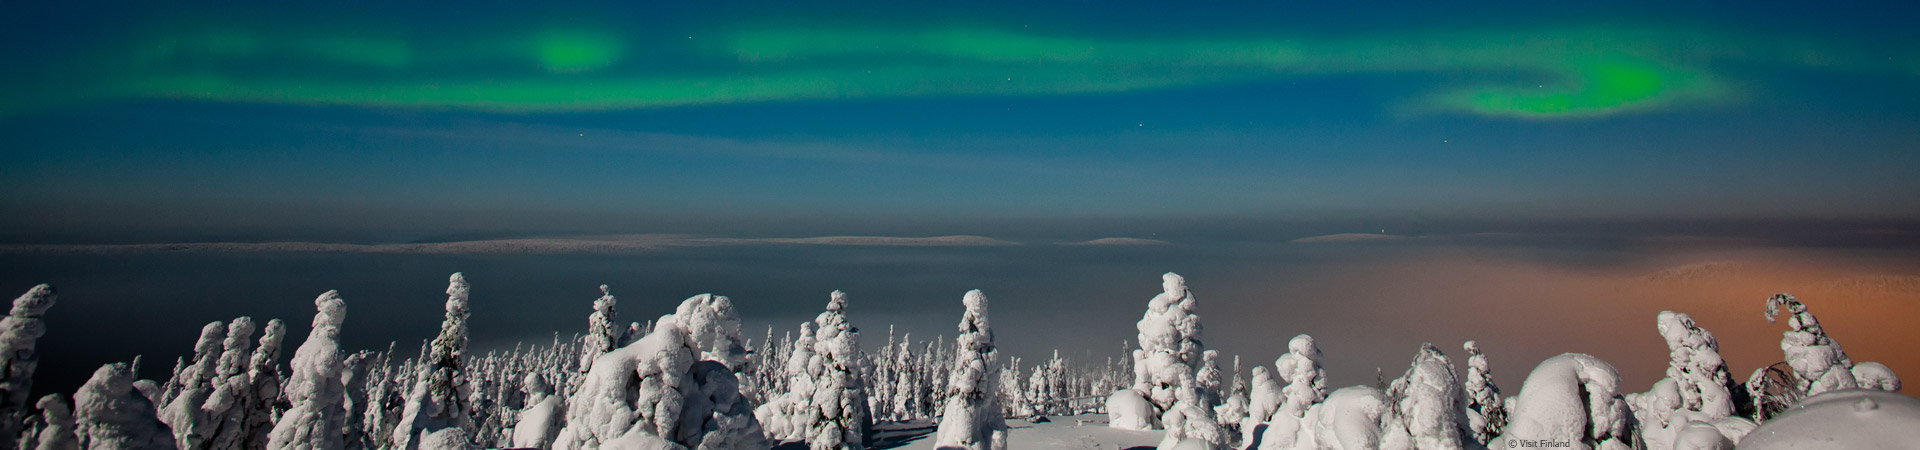 viaje a laponia auroras boreales iso syote paisje nevado